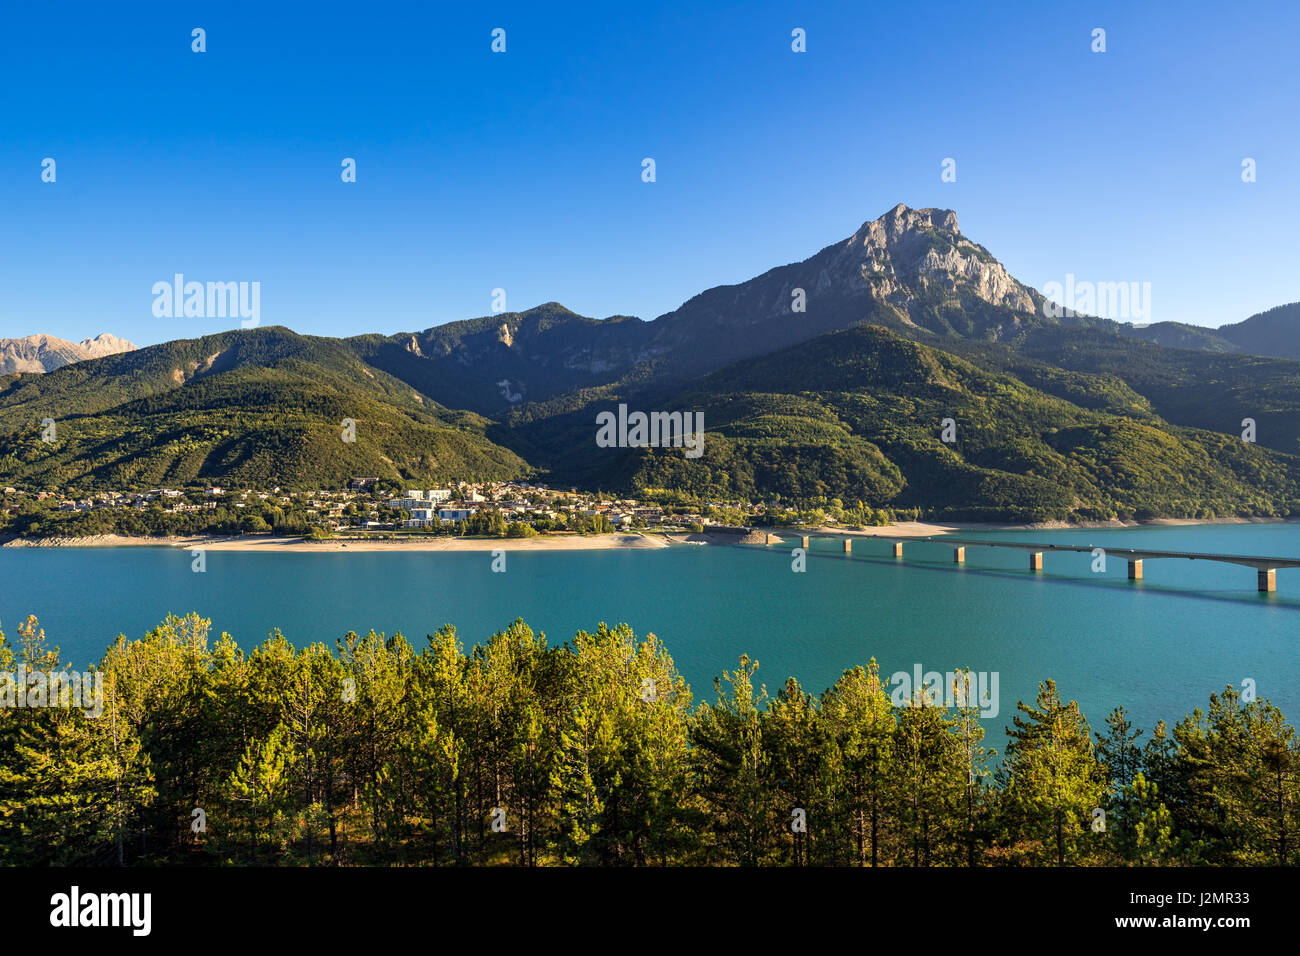 Savines-le-Lac village with the Grand Morgon and Serre-Poncon Lake in Summer. Alps, France Stock Photo